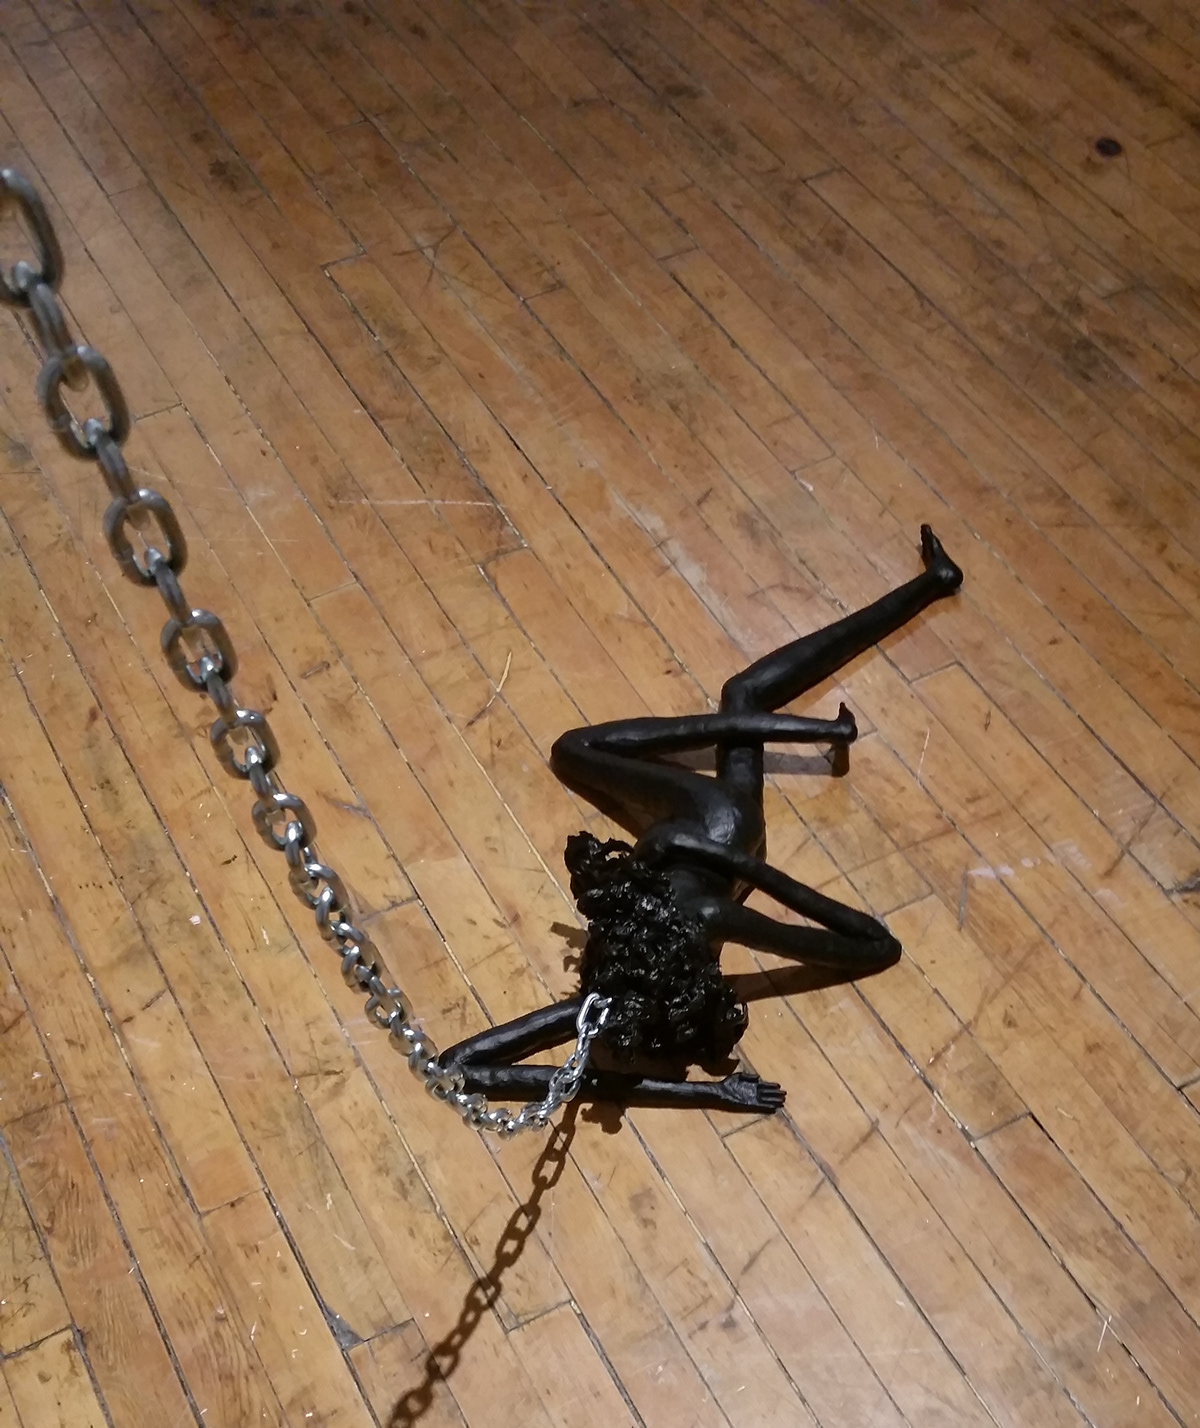 wax steel chain chains paint spraypaint figure figural connection interpersonal communication silence Stillness